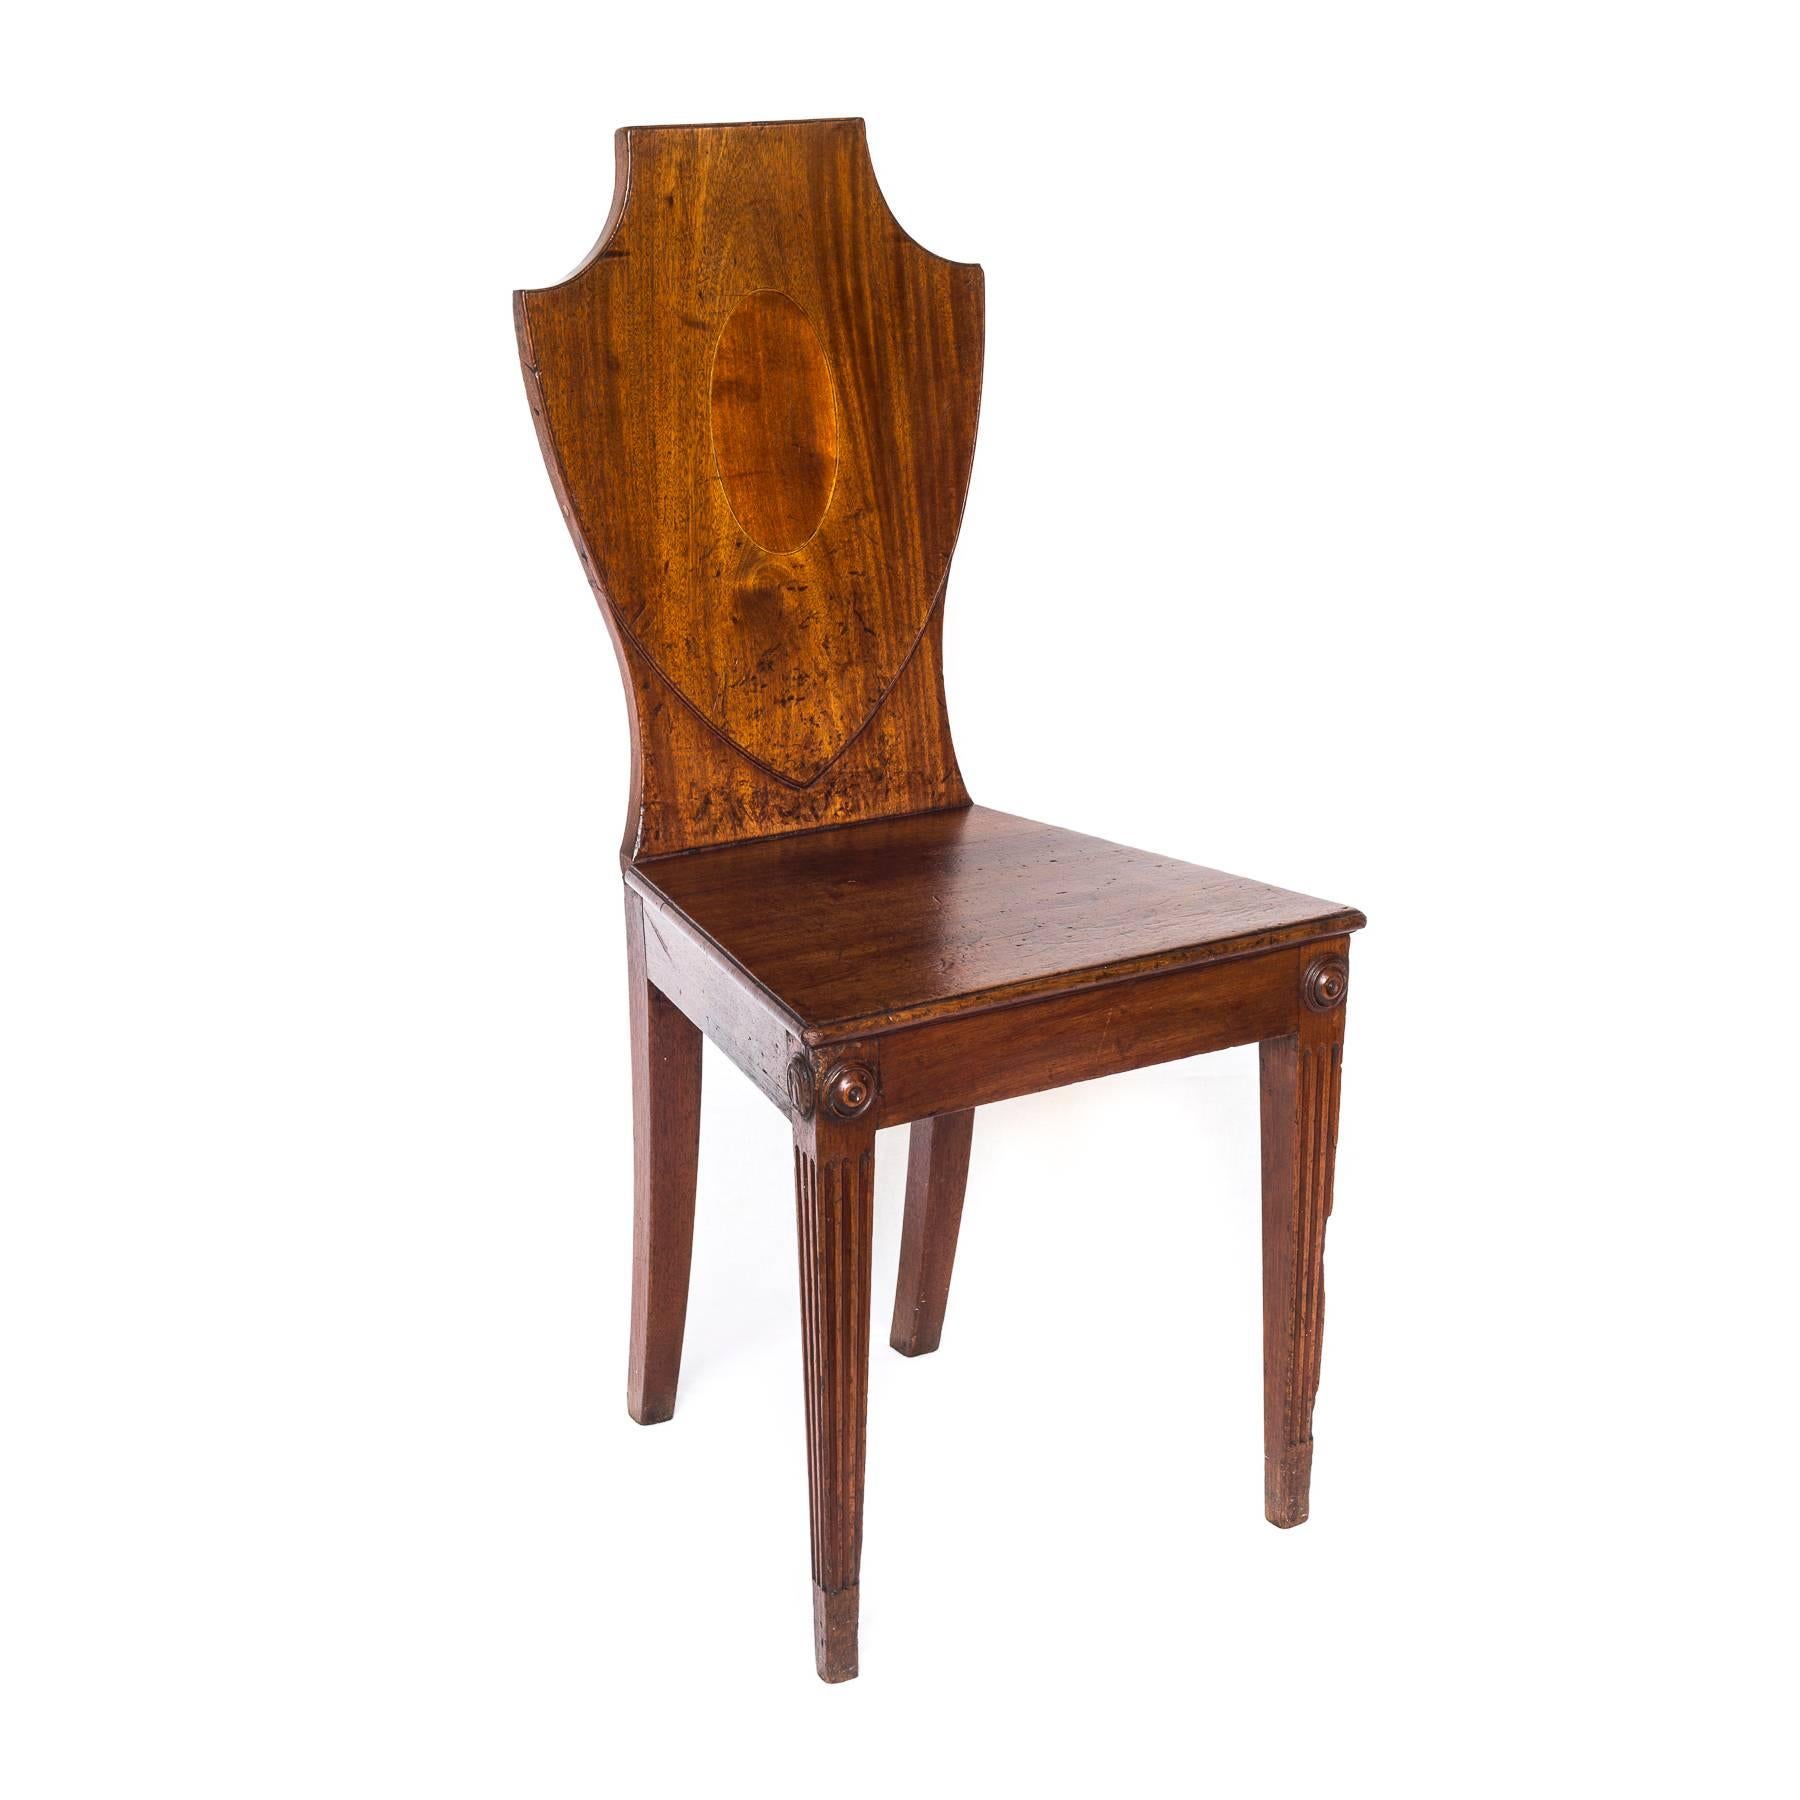 Regency 18th Century English Mahogany Hall Chair, c. 1790